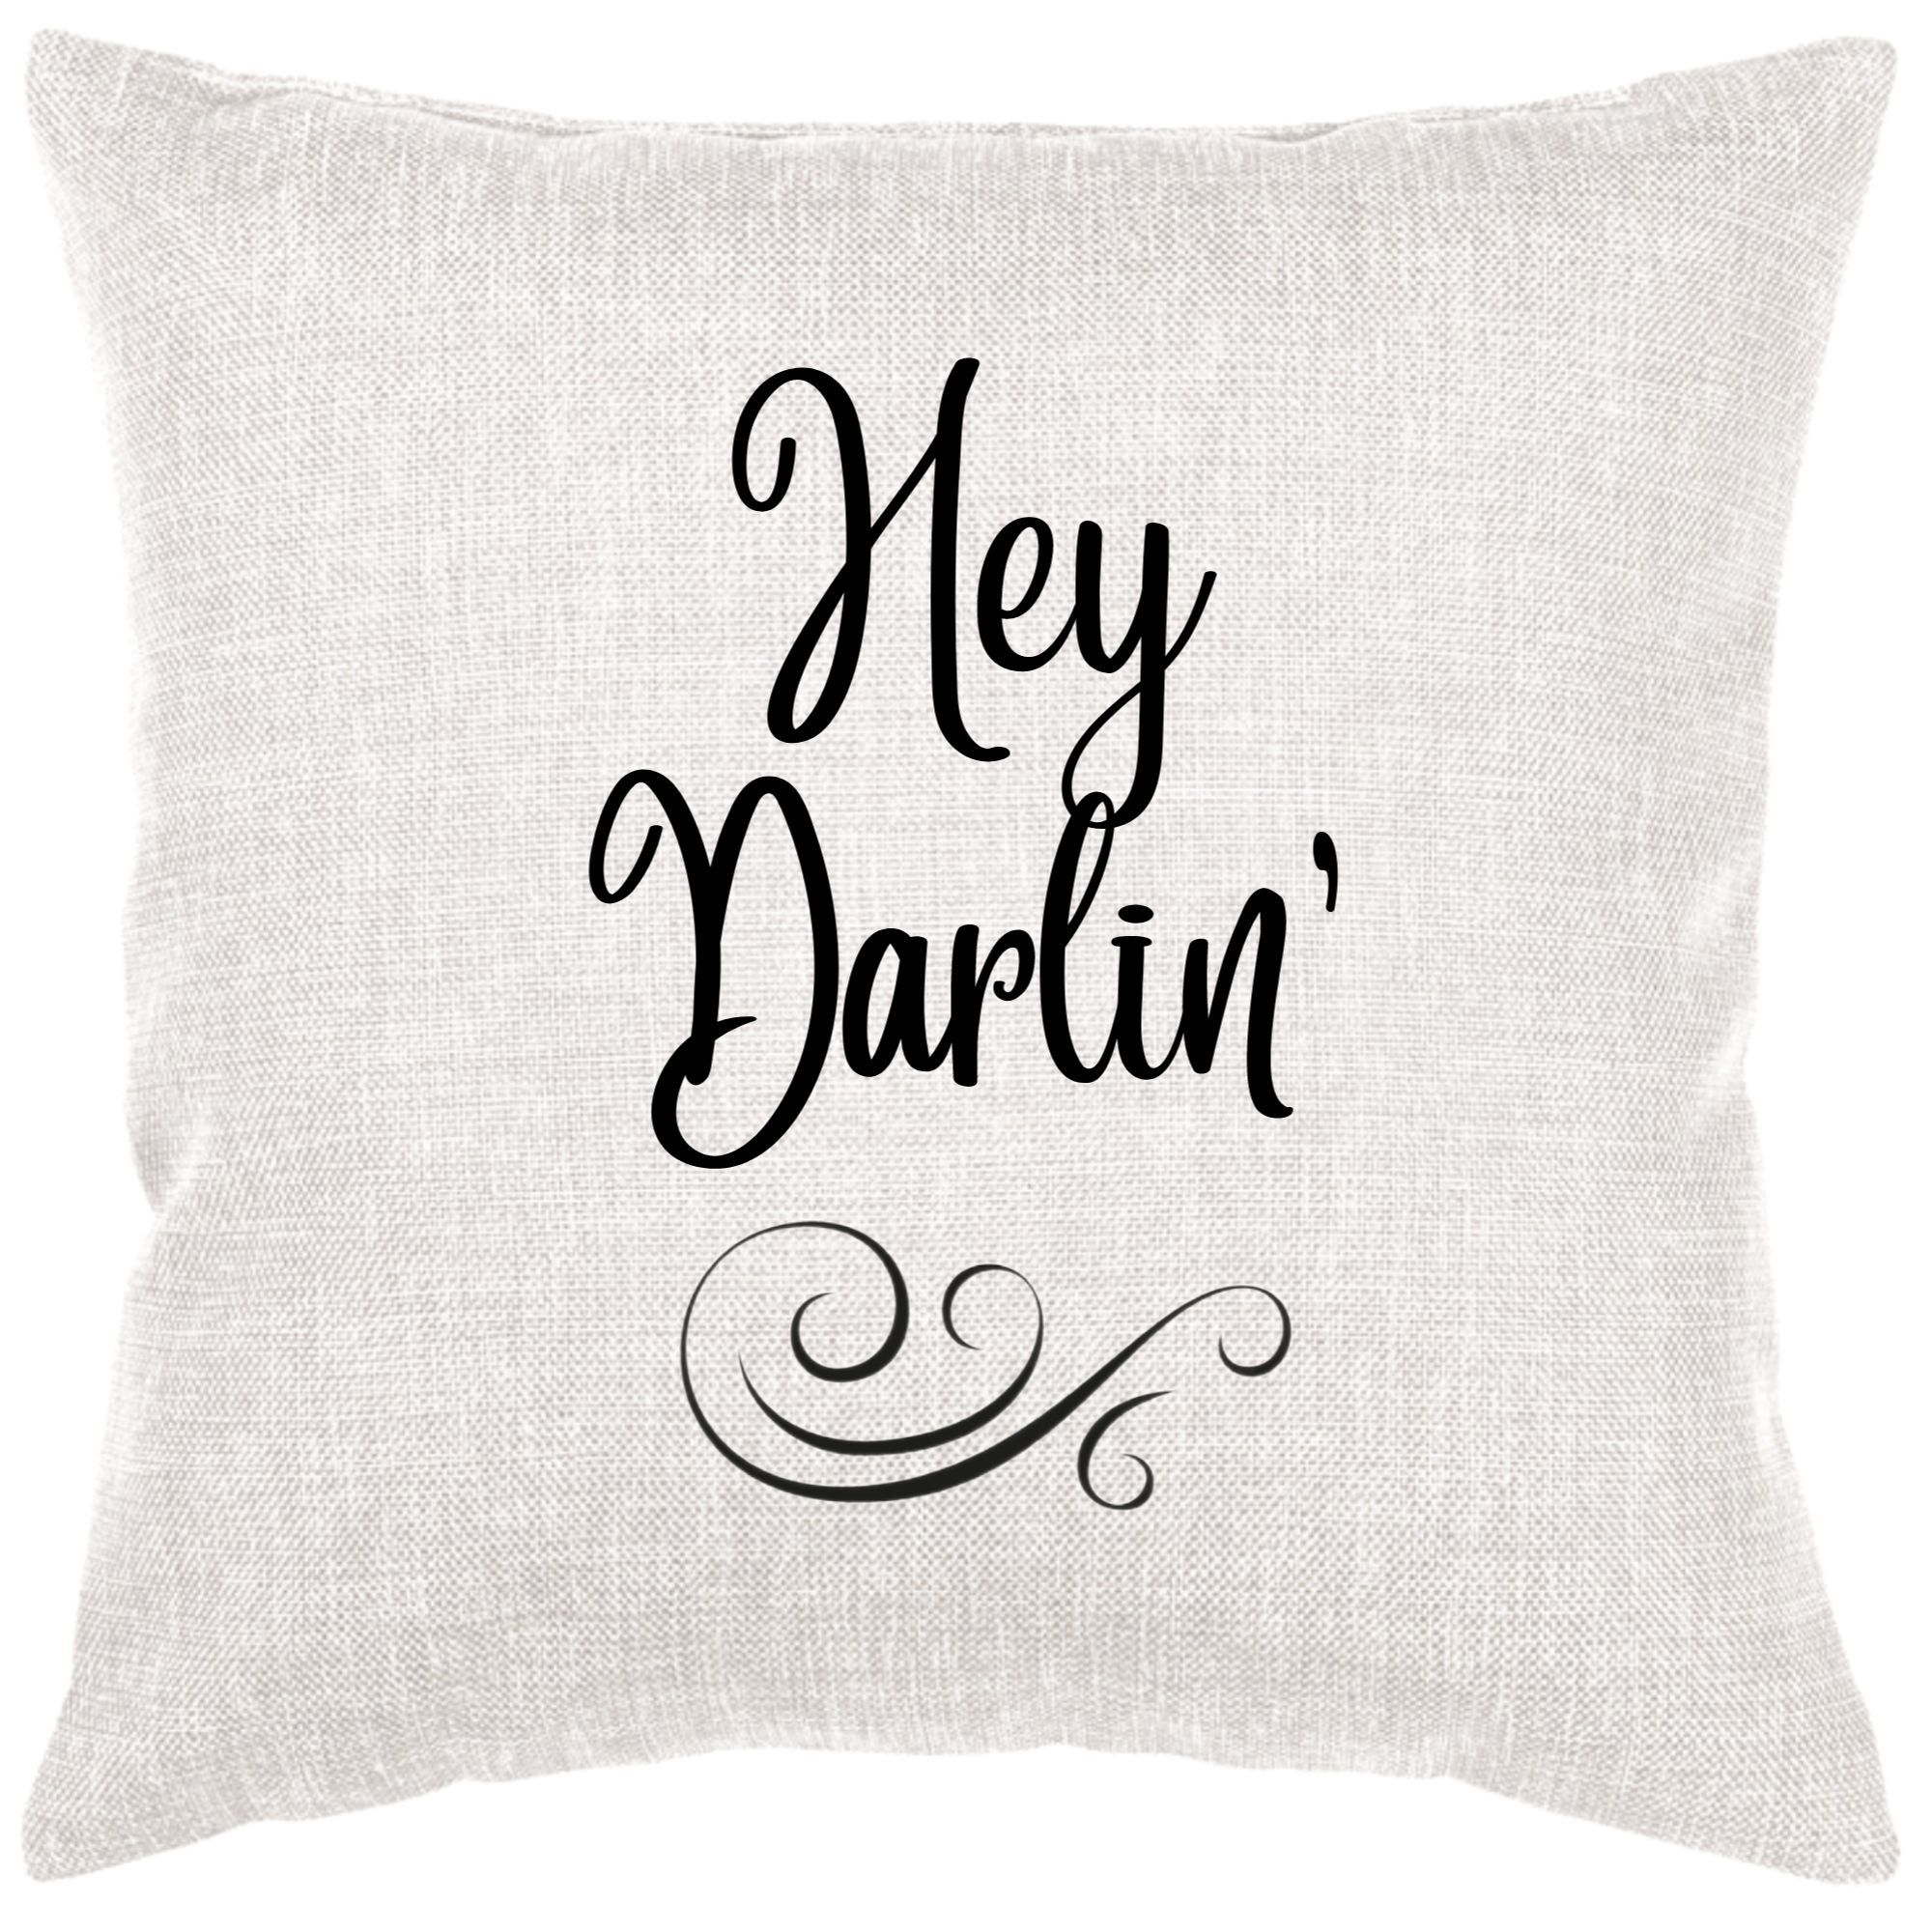 Hey Darlin Down Pillow